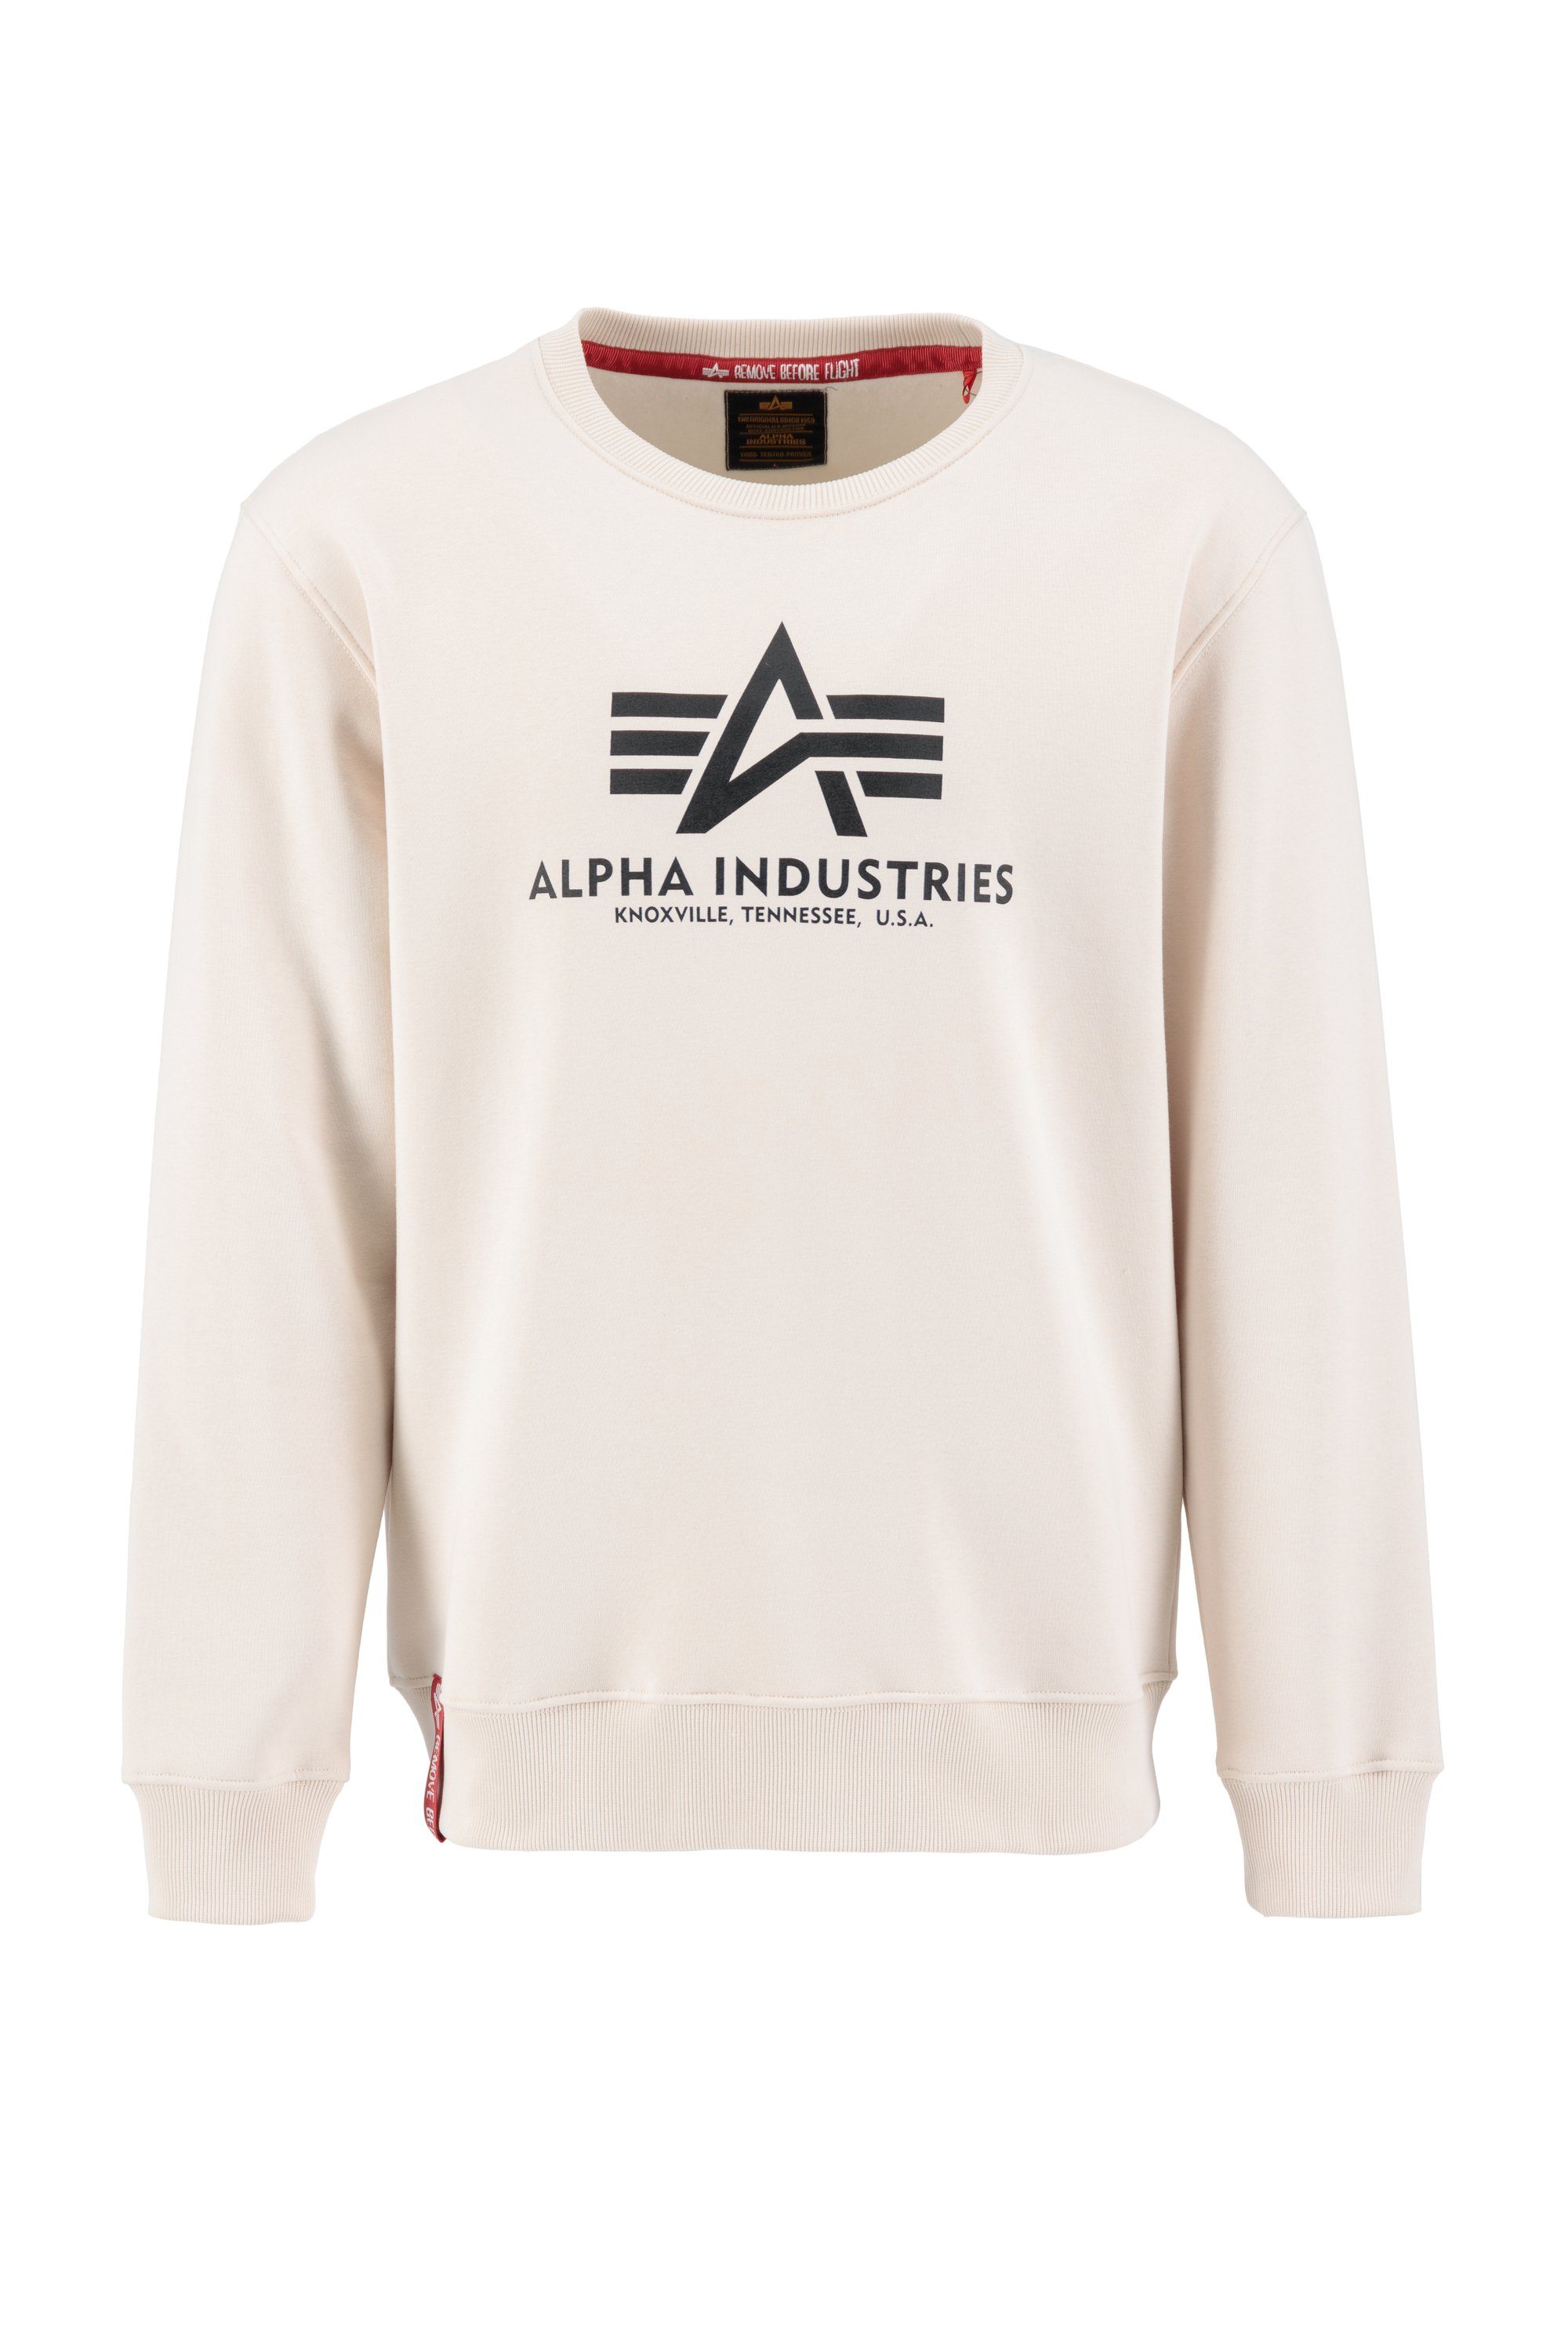 Offizieller Vertreter Alpha Industries Industries Sweatshirts Basic Sweater Alpha Sweater stream white jet - Men